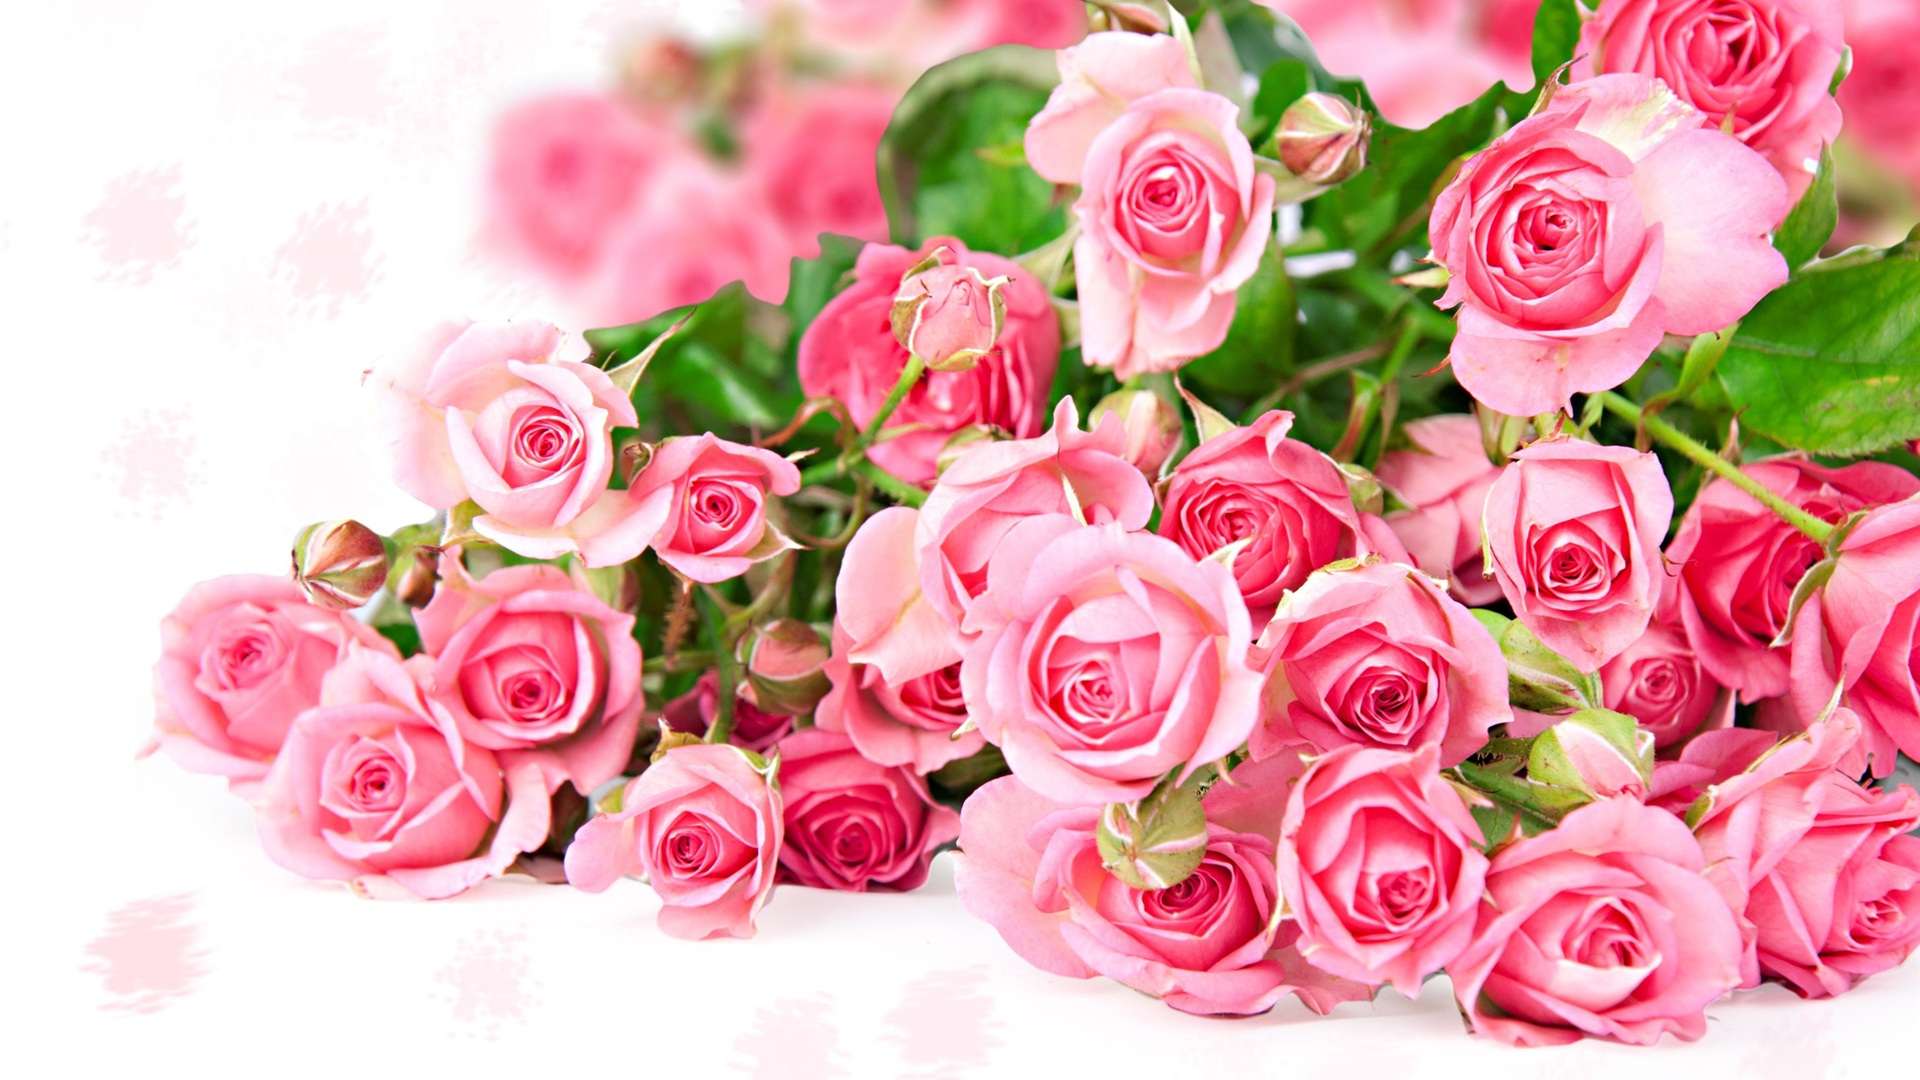 schöne rosa rosen tapeten kostenloser download,blume,gartenrosen,blühende pflanze,rose,rosa